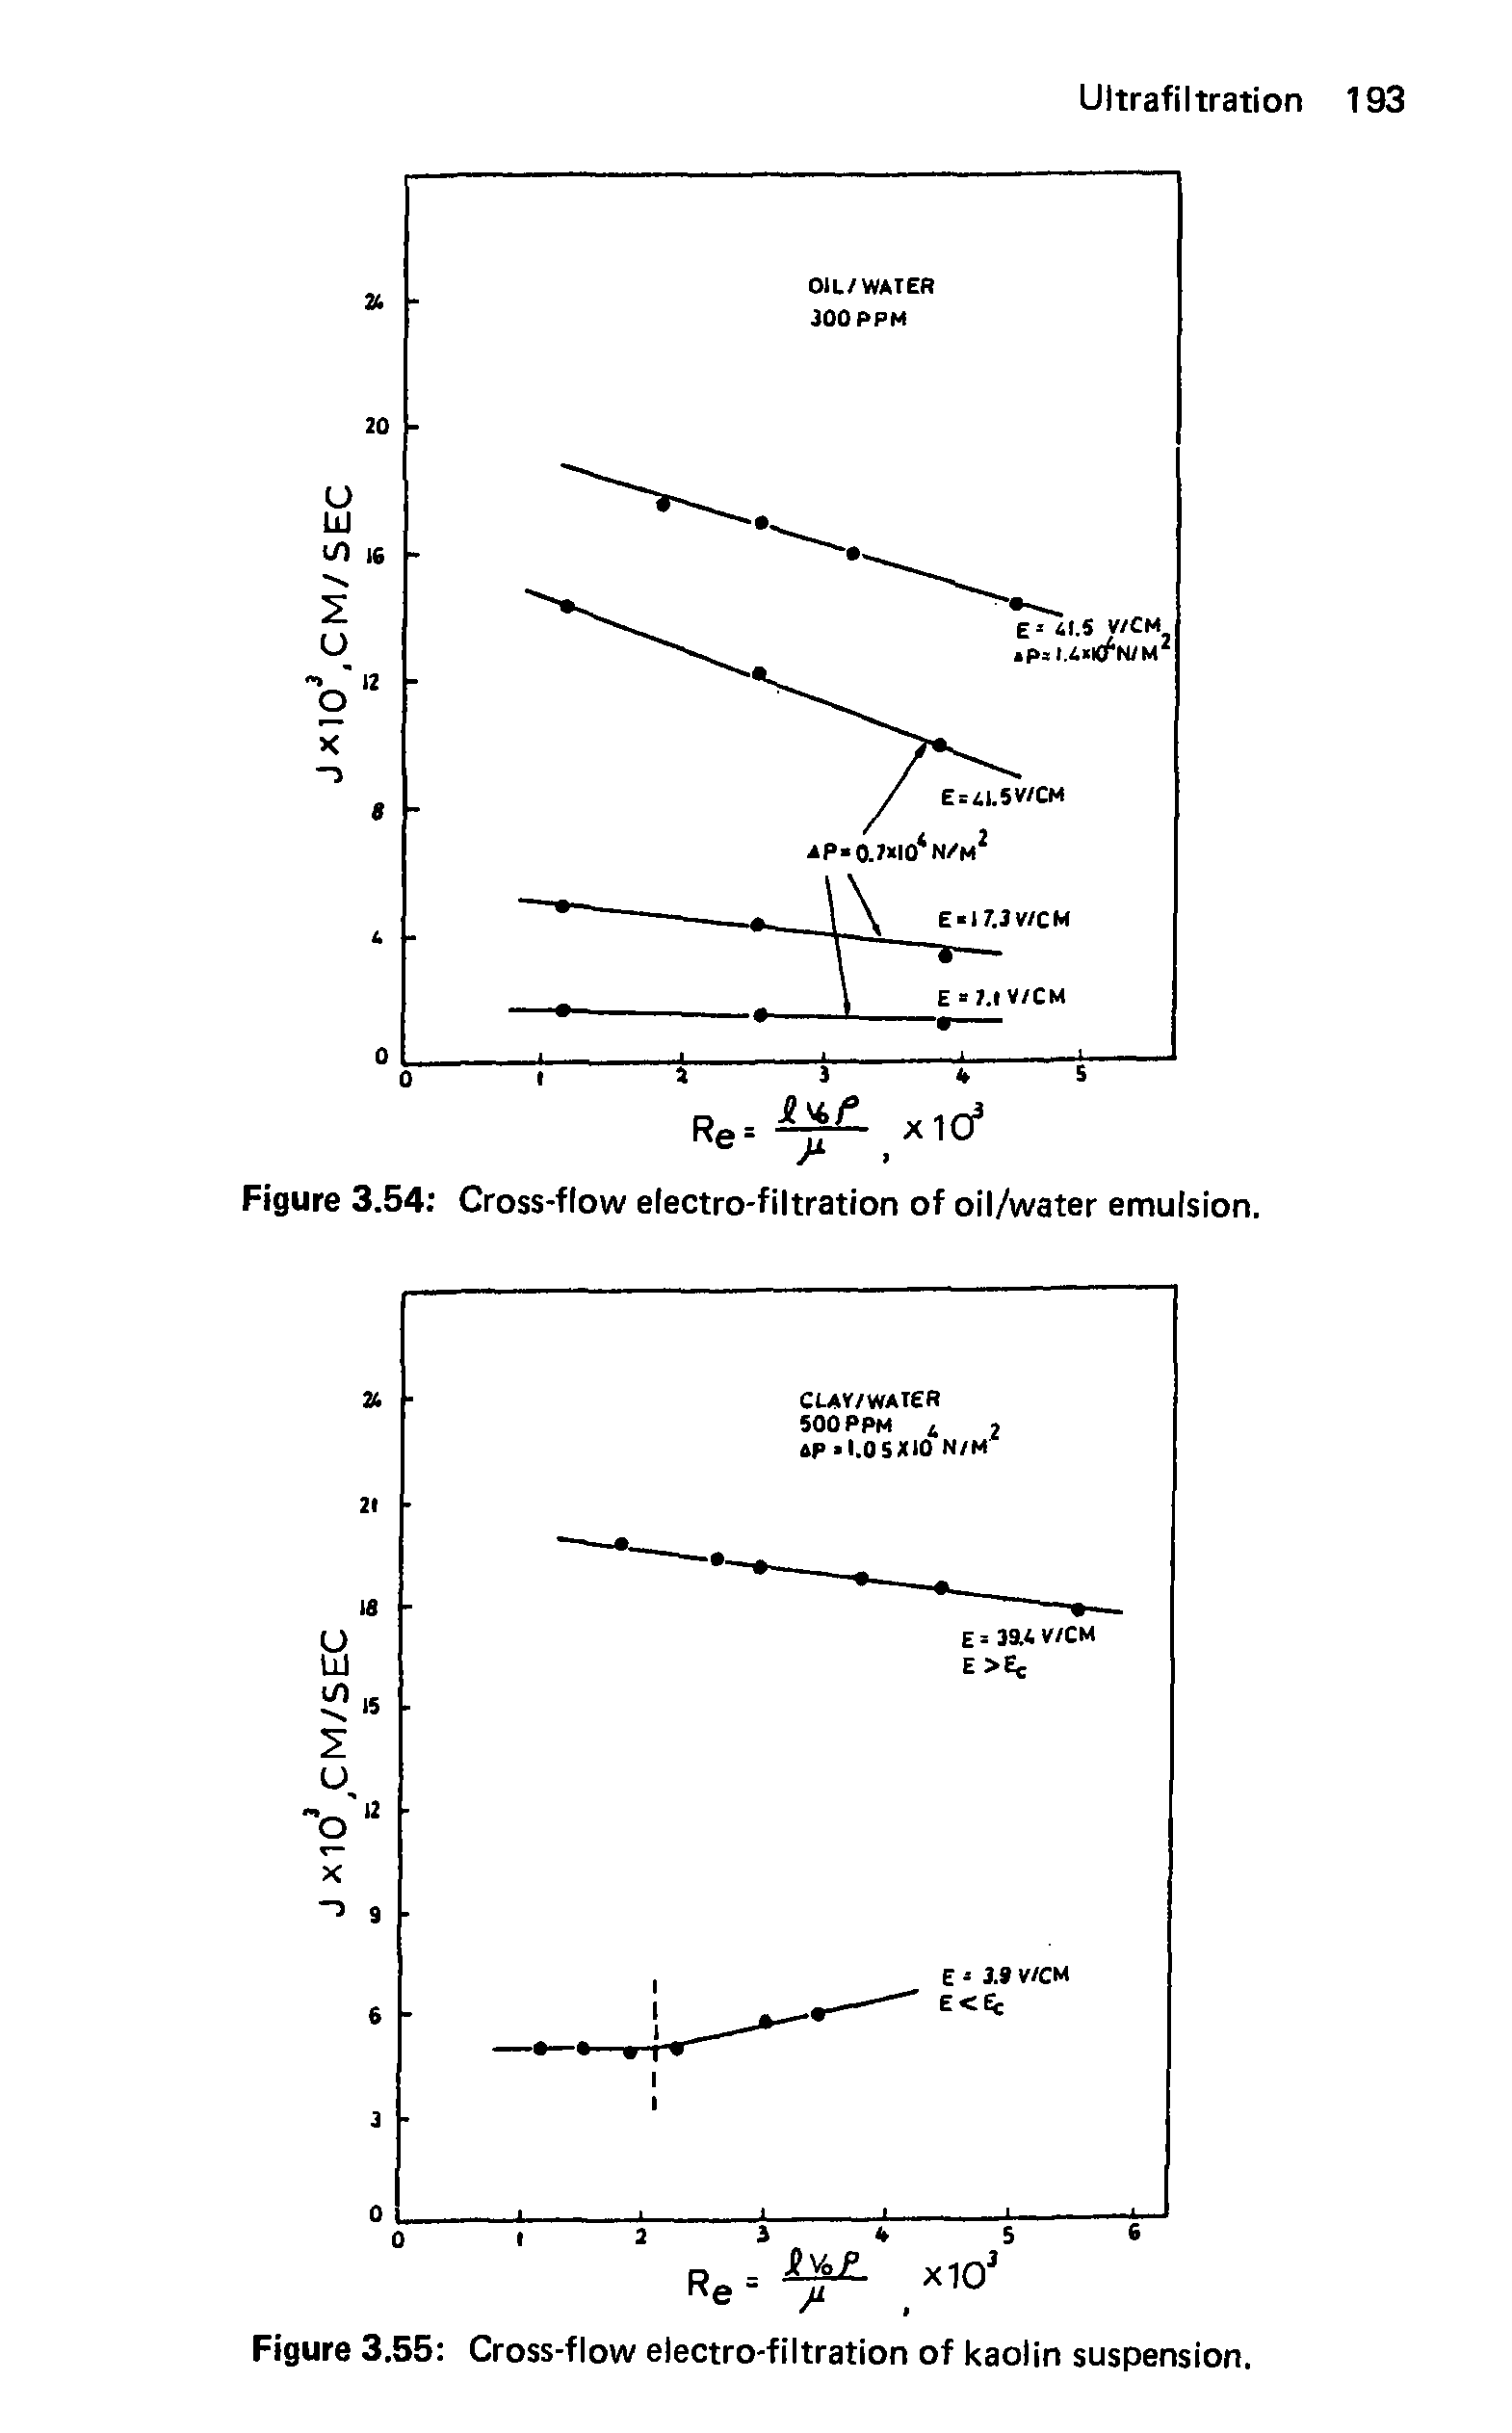 Figure 3.55 Cross-flow electro-filtration of kaolin suspension.